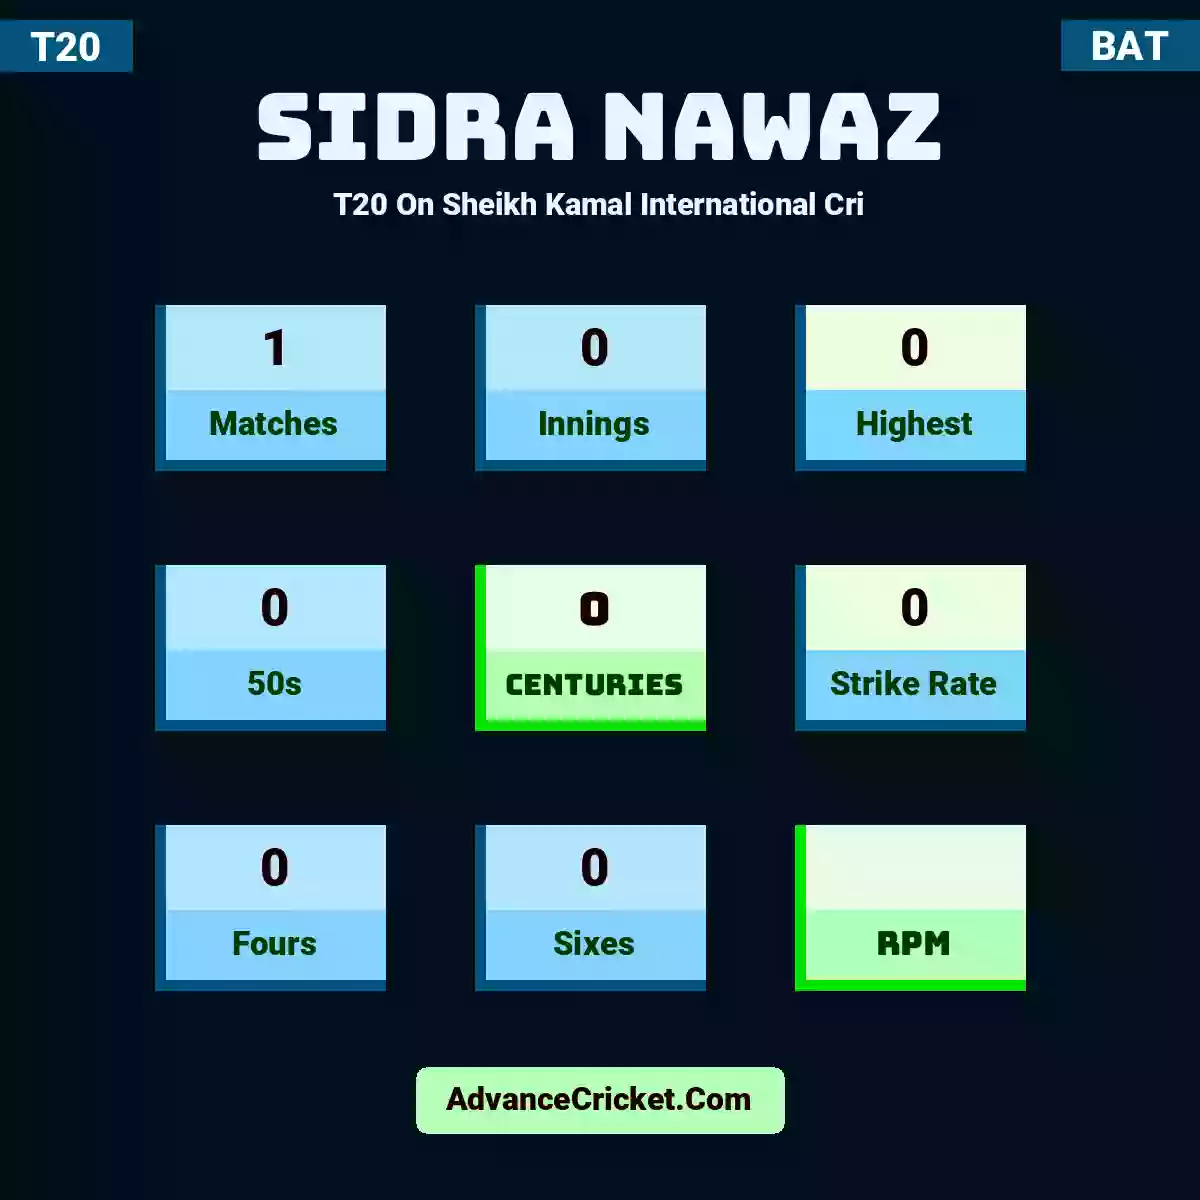 Sidra Nawaz T20  On Sheikh Kamal International Cri, Sidra Nawaz played 1 matches, scored 0 runs as highest, 0 half-centuries, and 0 centuries, with a strike rate of 0. S.Nawaz hit 0 fours and 0 sixes.